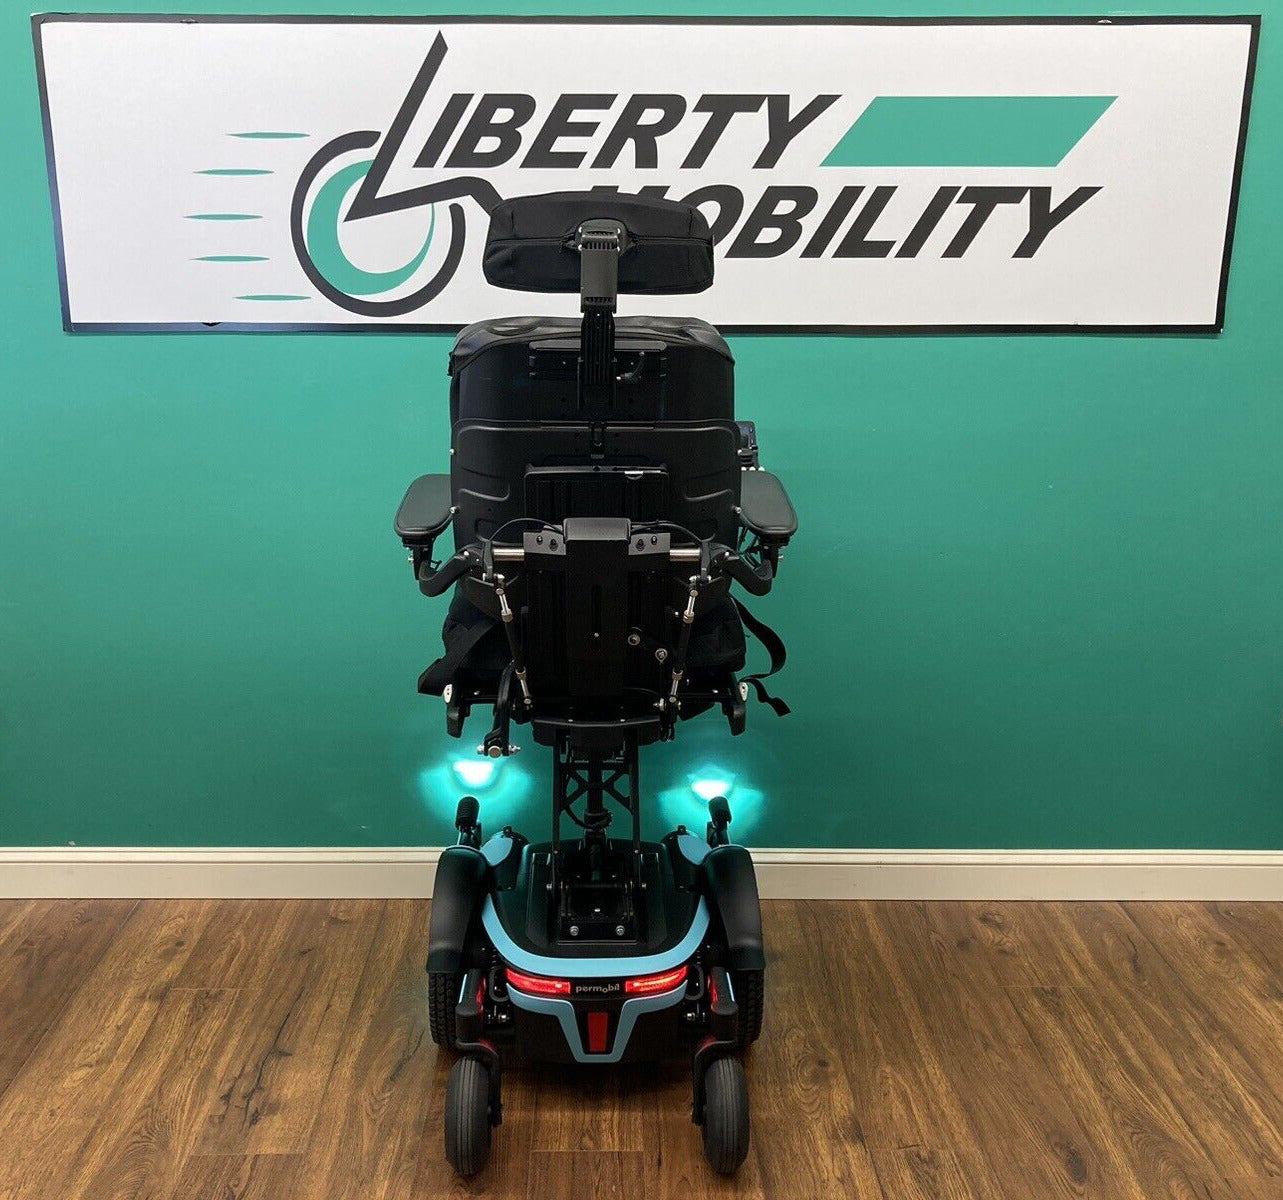 2021 Permobil M3 Wheelchair w/ Elevate, Tilt, Recline, Legs Lighting Kit #LM7551